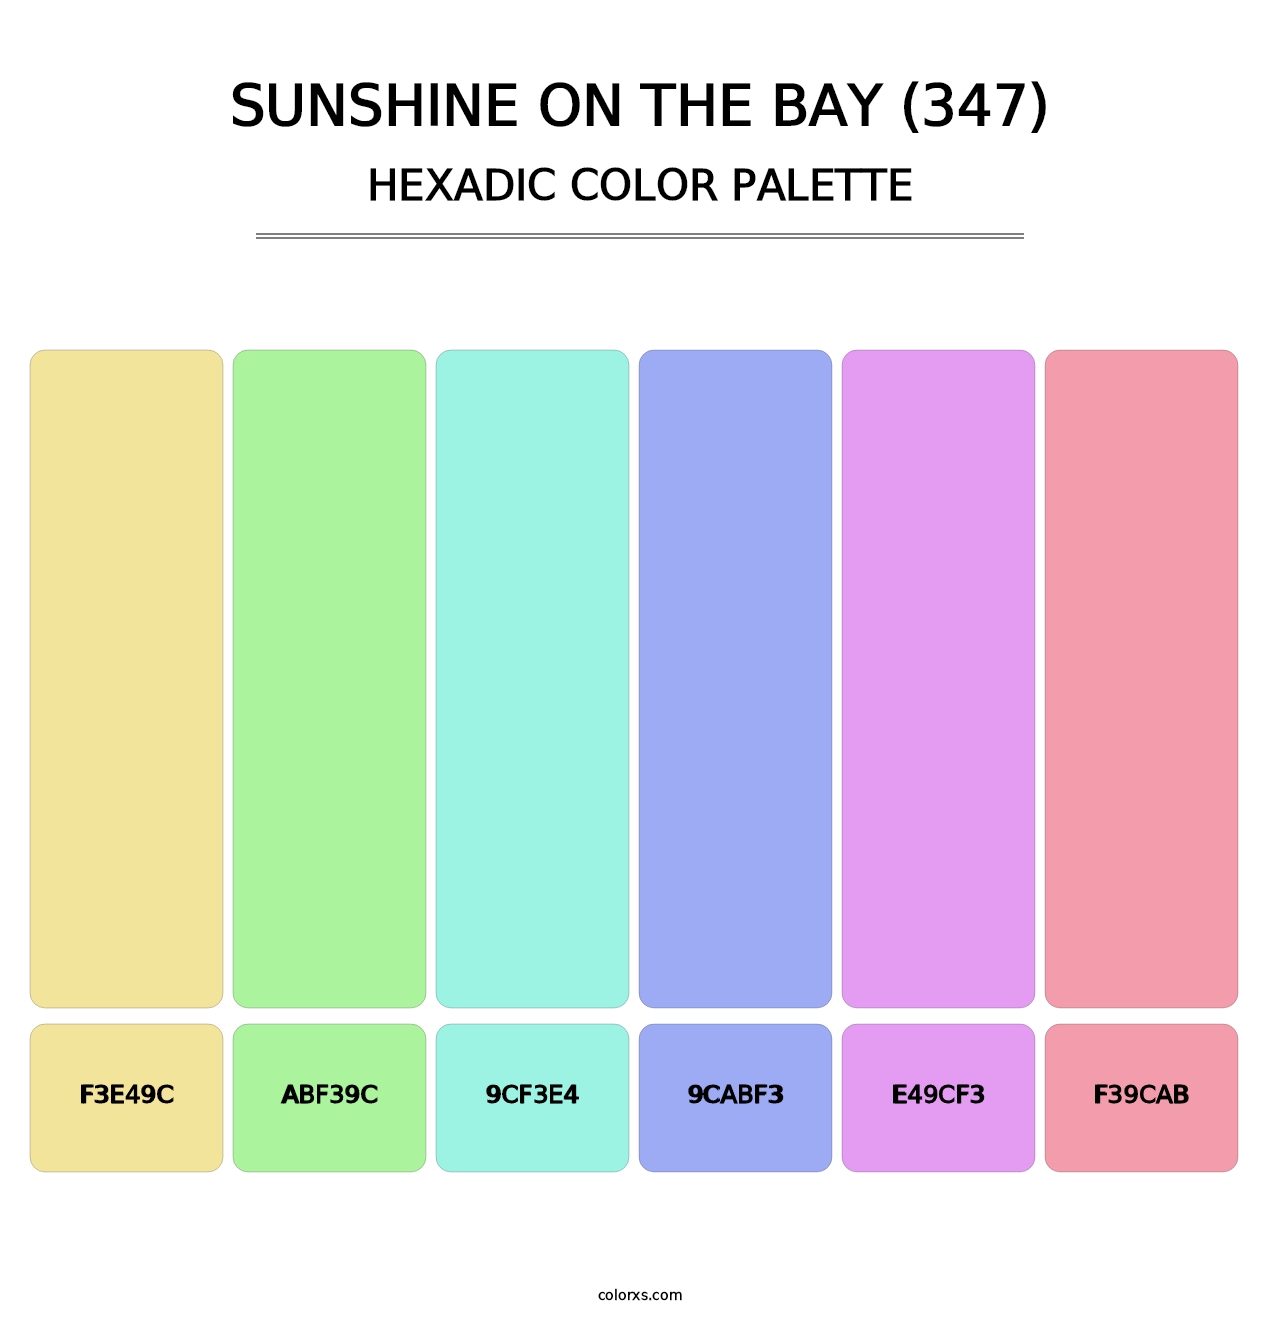 Sunshine on the Bay (347) - Hexadic Color Palette